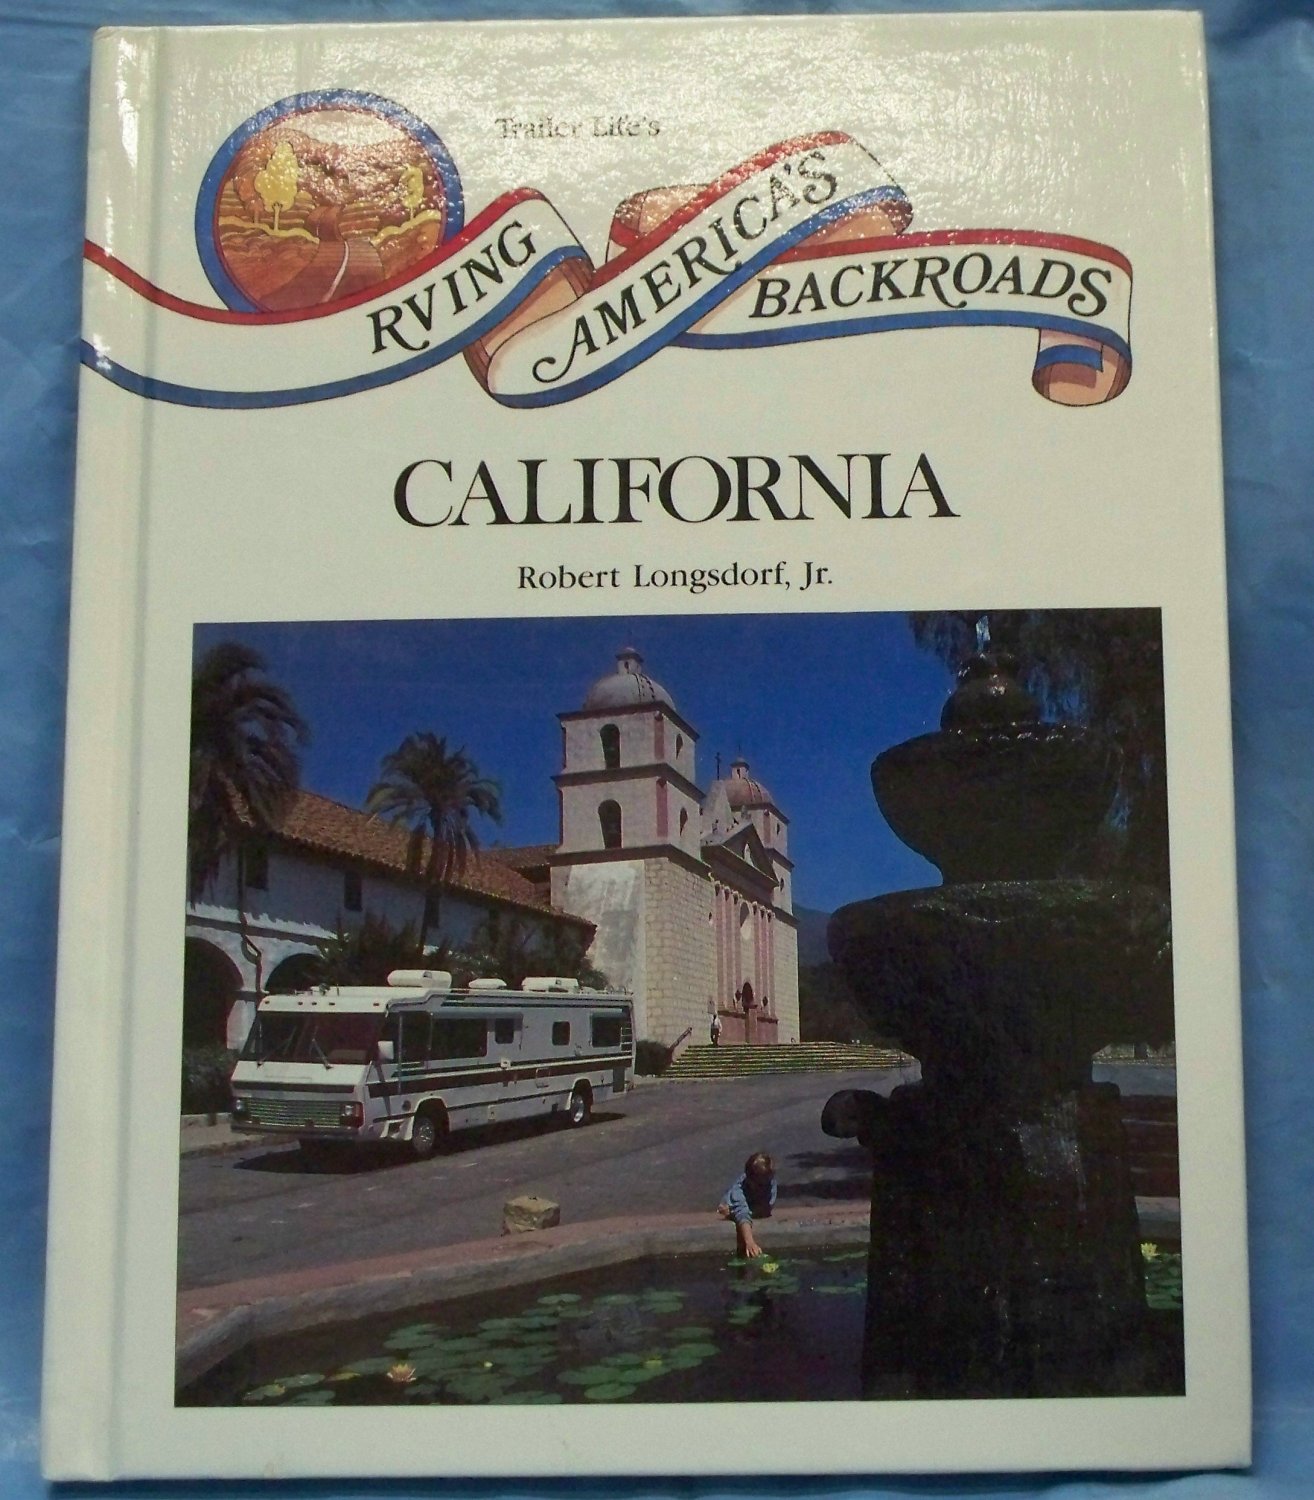 Trailer Life's RVing America's Backroads:California, Robert Longsdorf, Jr.